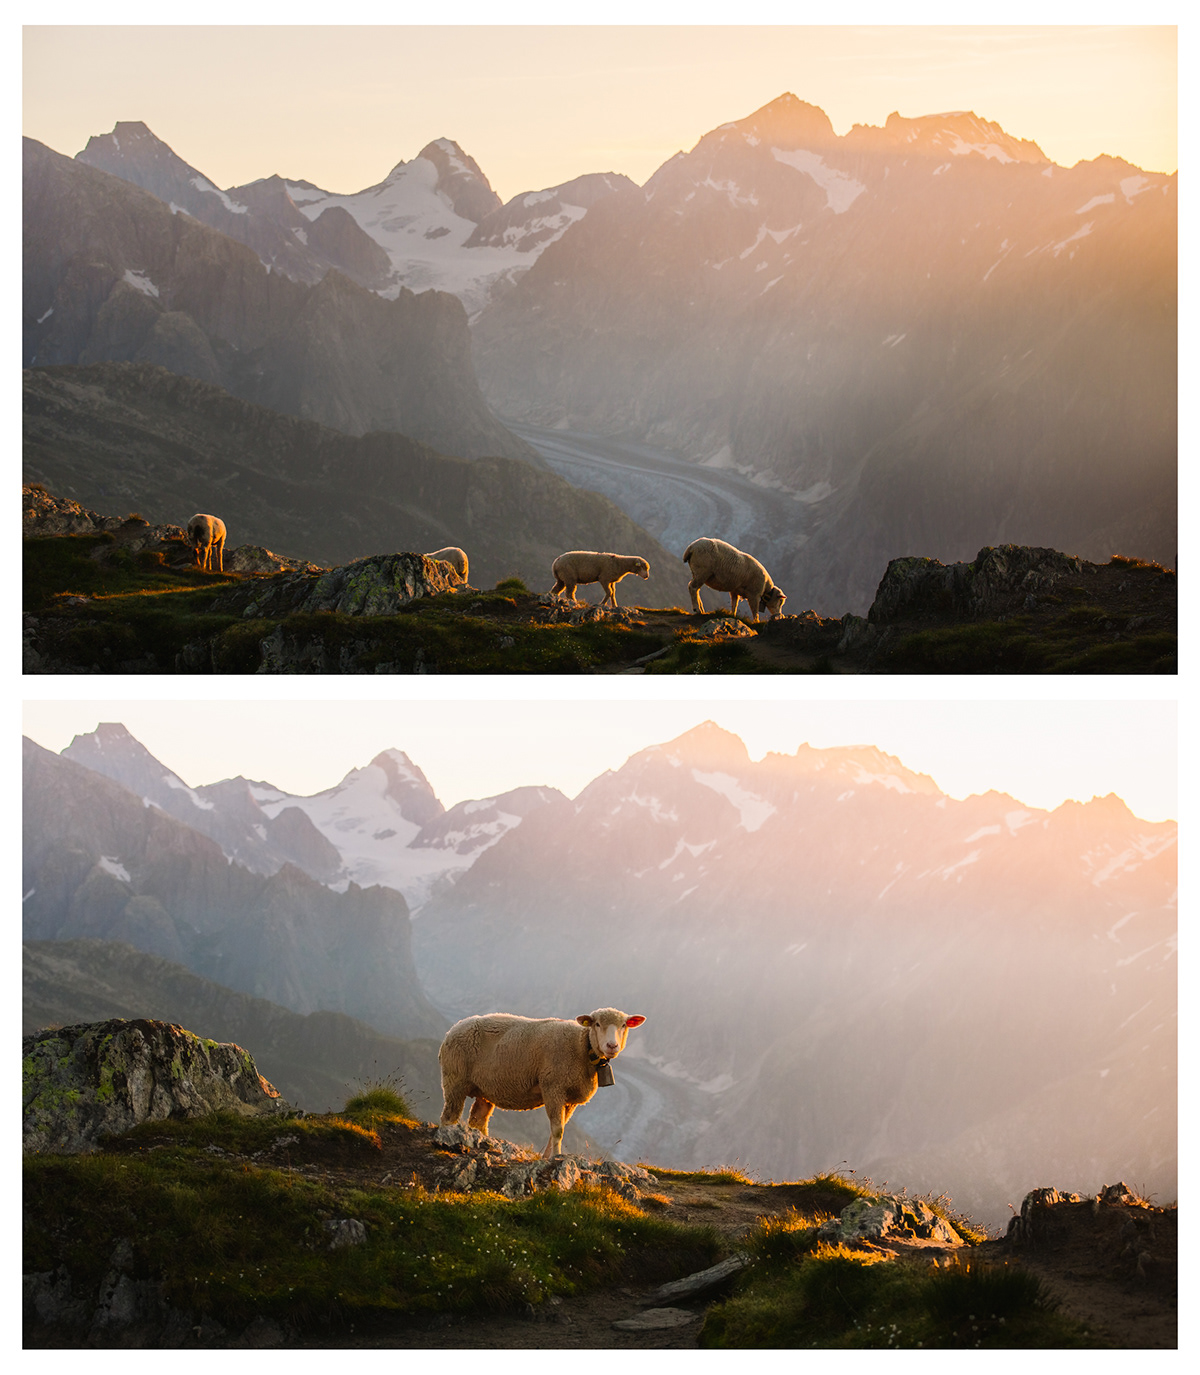 alps animals hiking Landscape mountains Nature Outdoor sheep Switzerland Sunrise